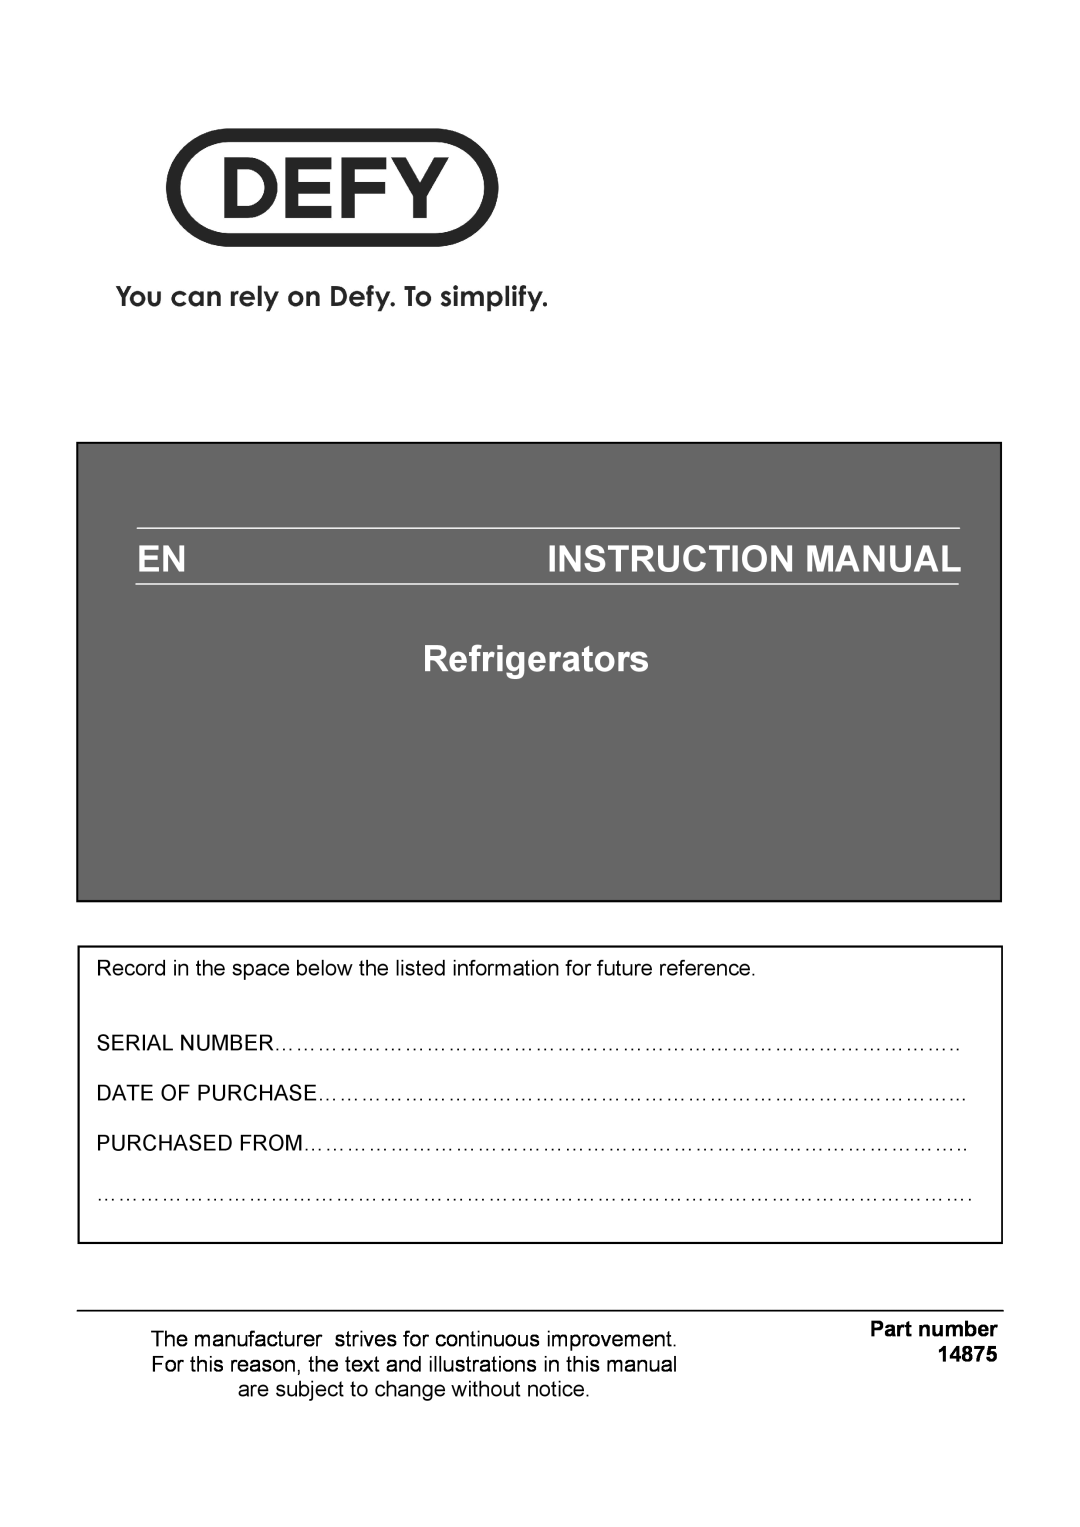 Defy Appliances 14875 instruction manual Part number, Refrigerators, Instruction Manual 